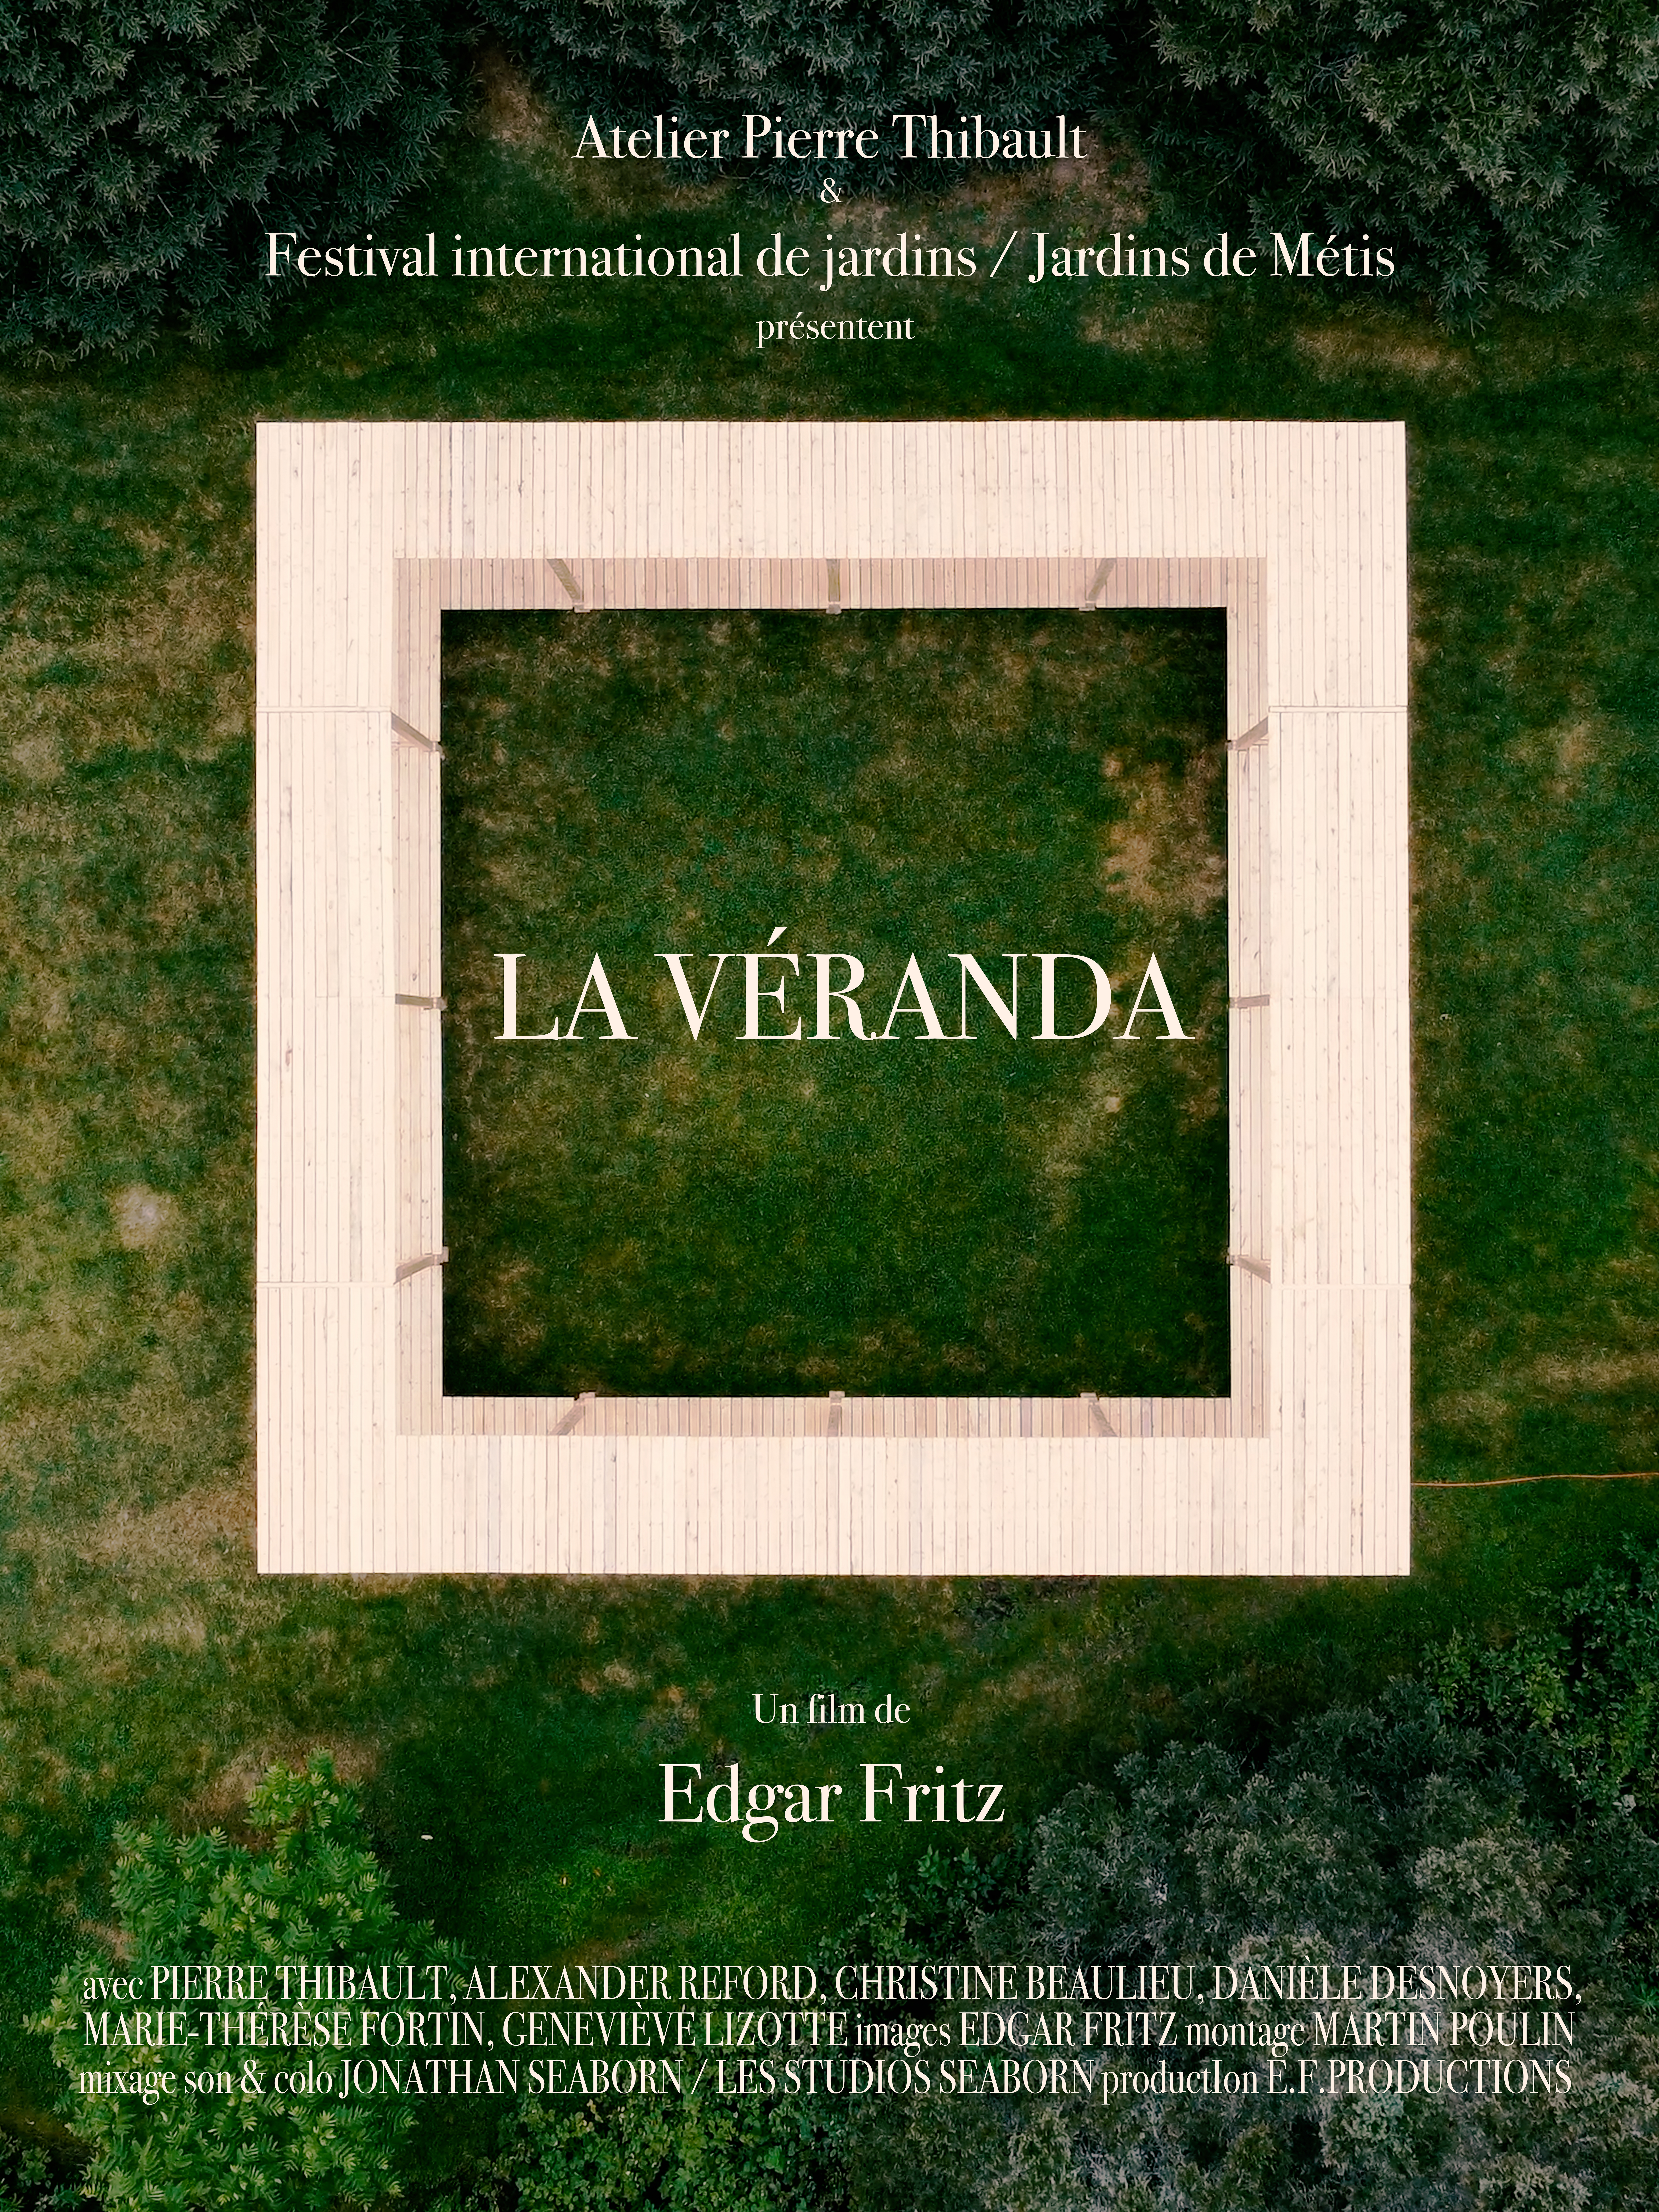 Screening of La Véranda, by Edgar Fritz